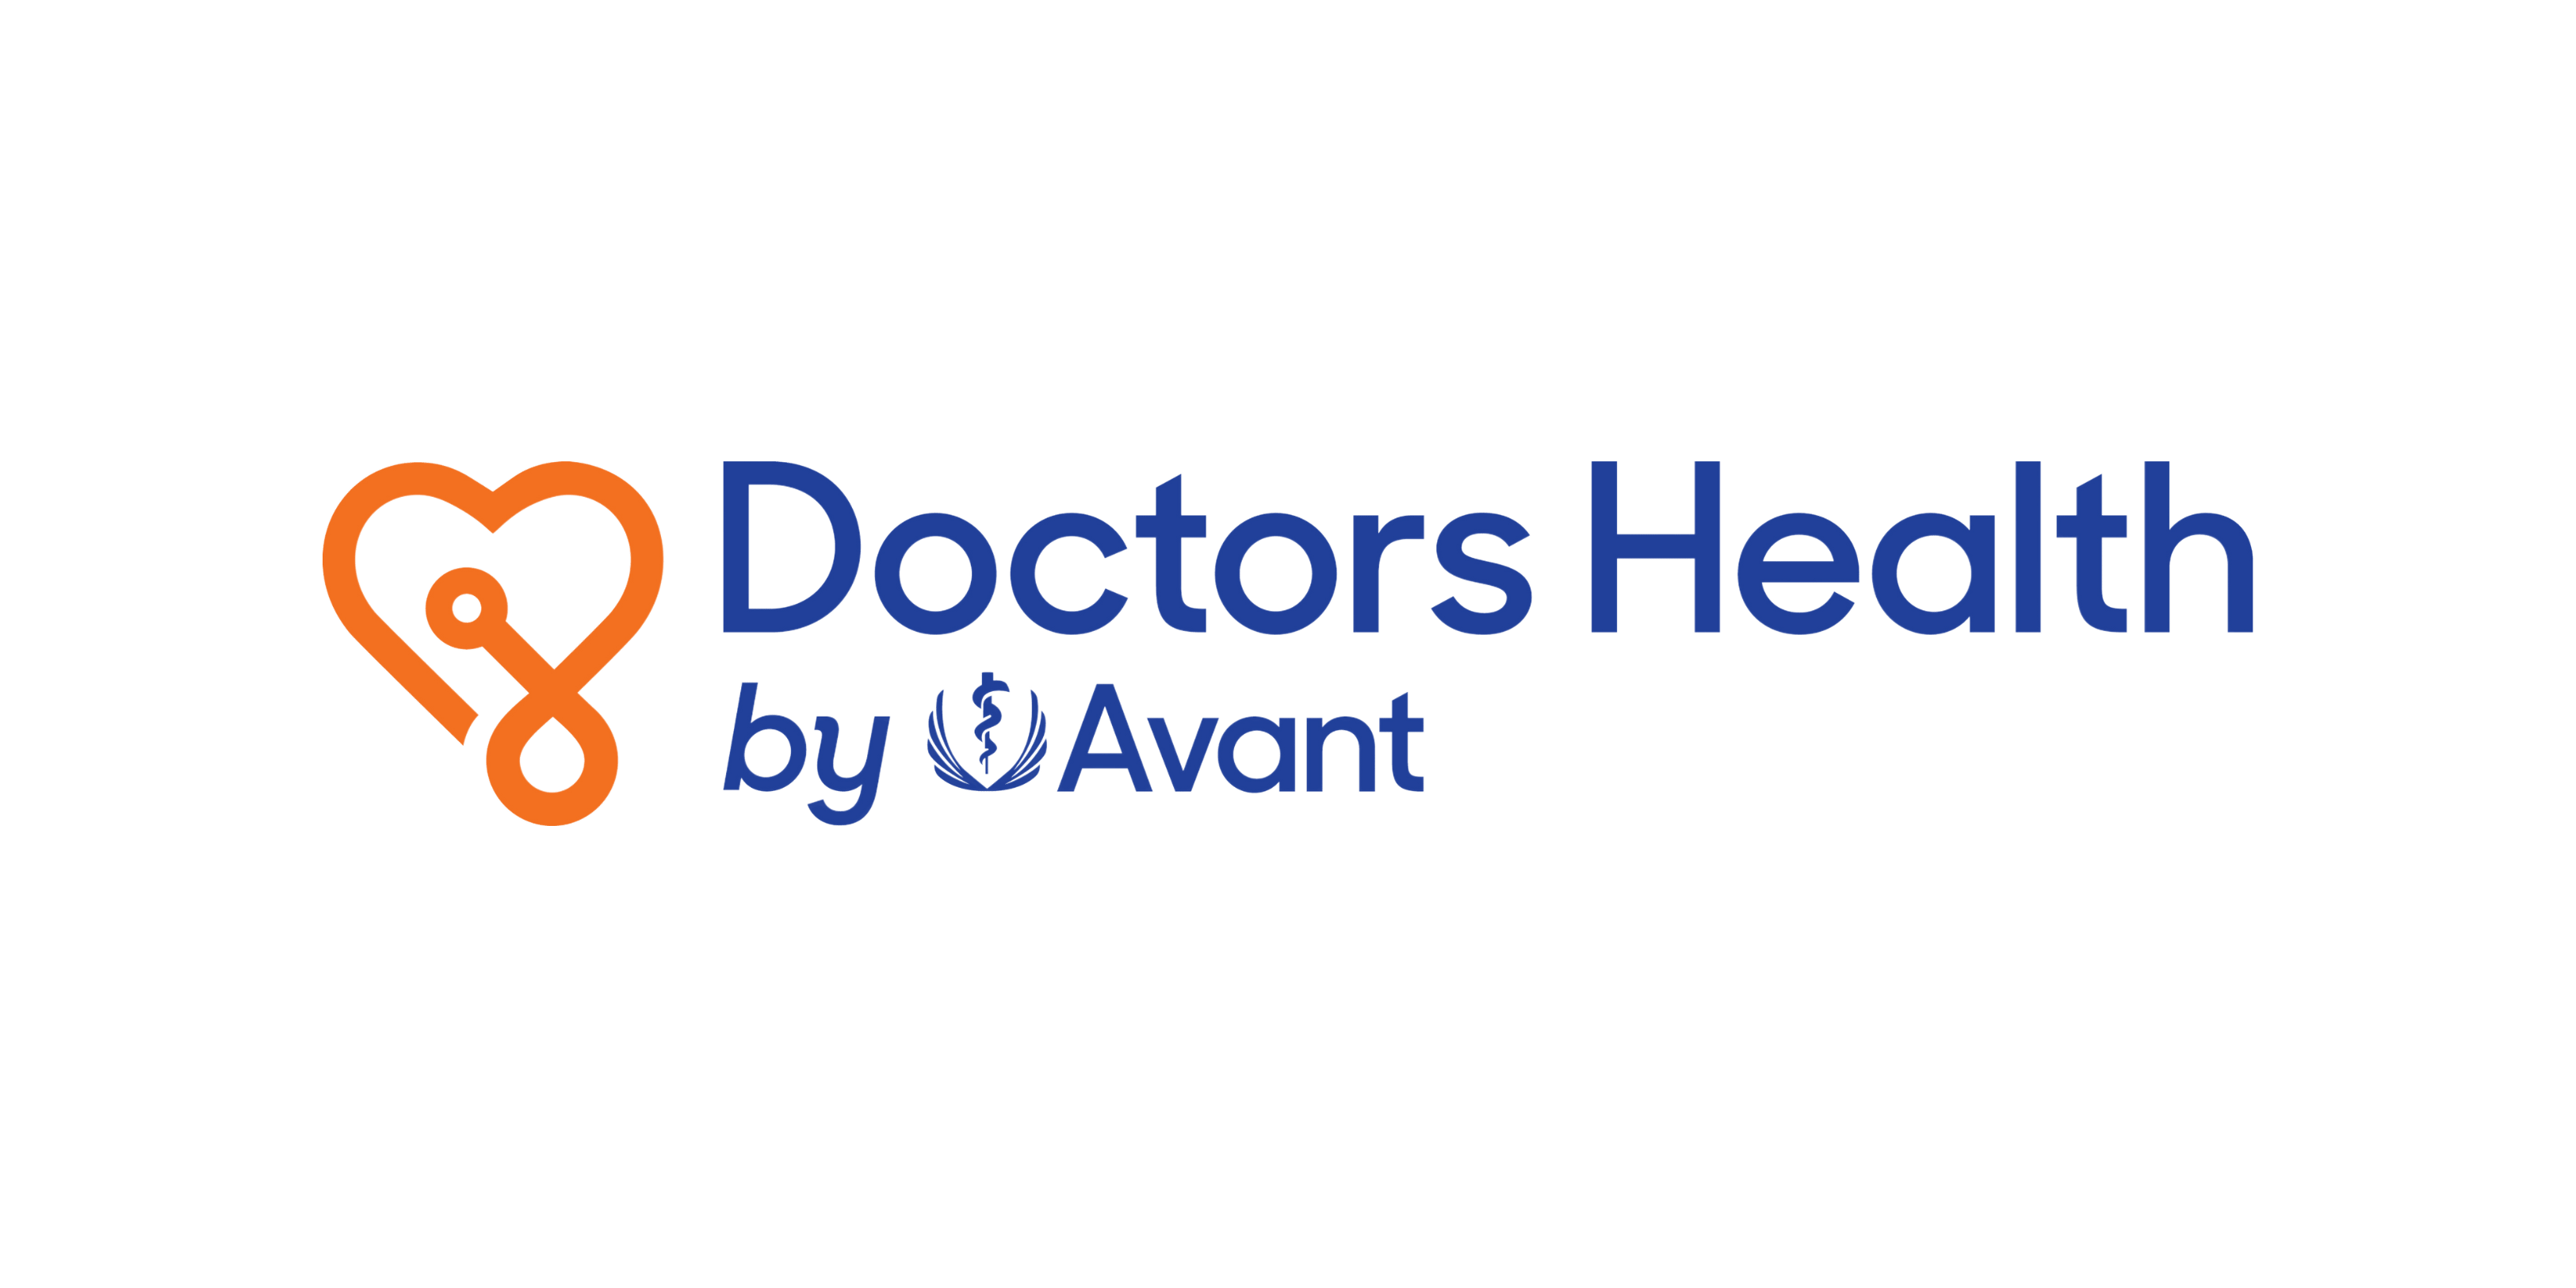 A photo of Doctors Health logo